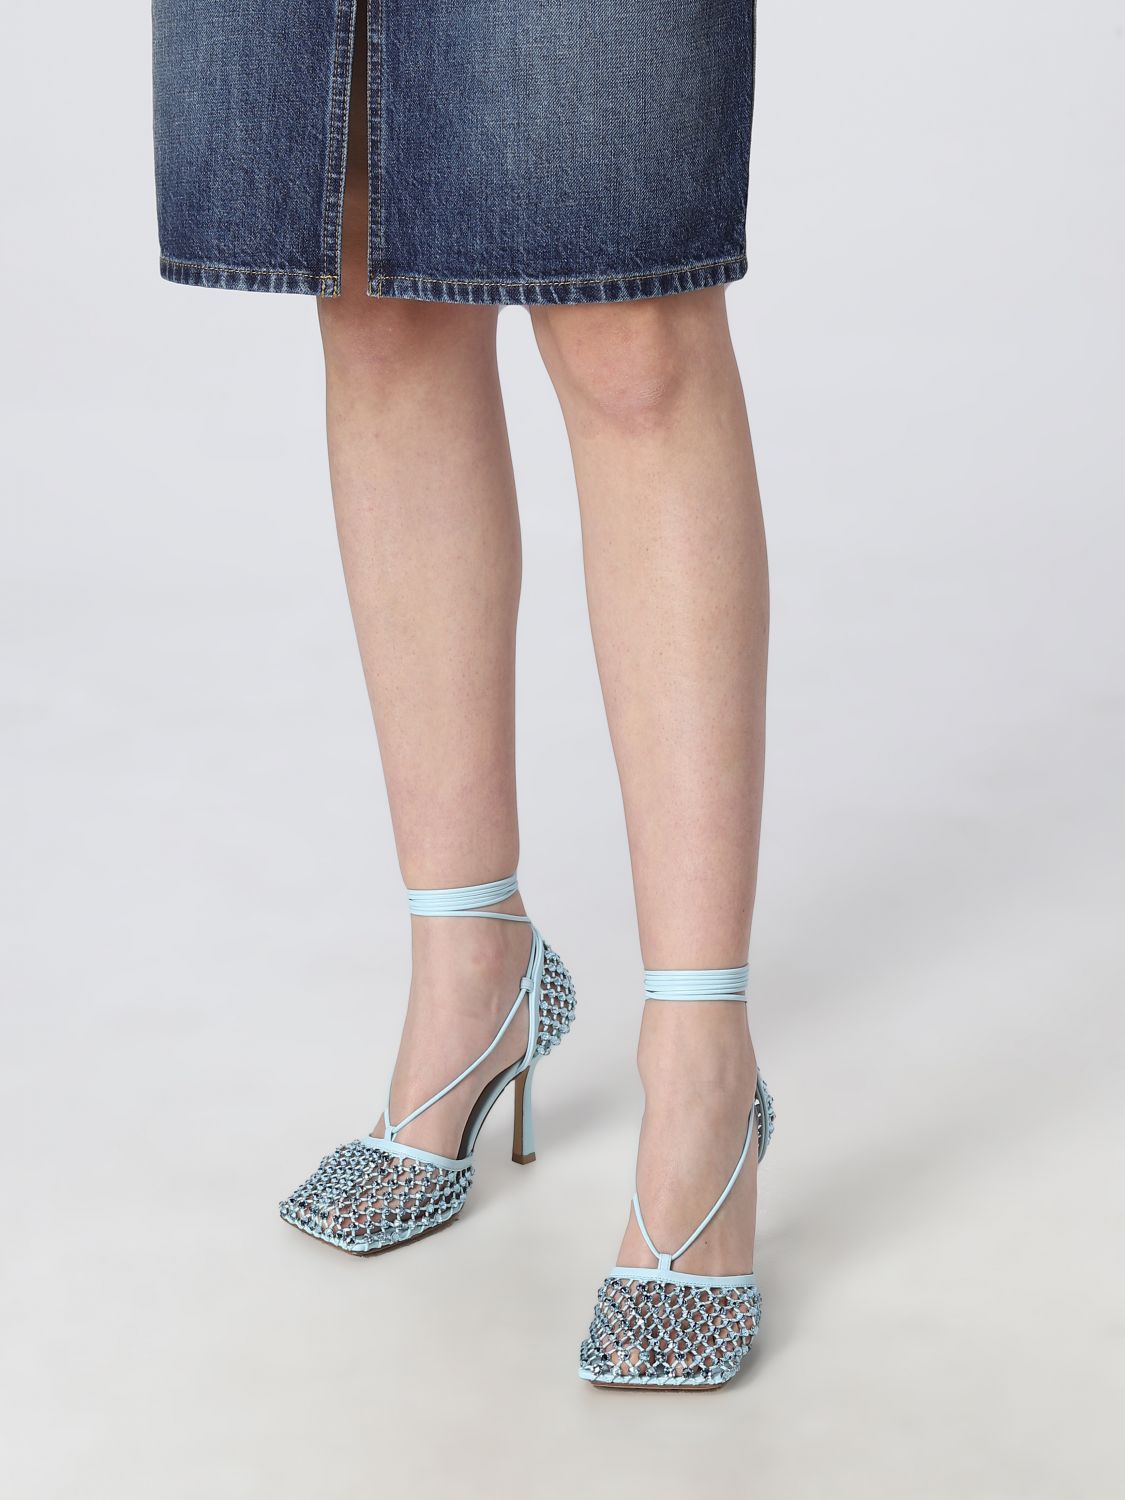 BOTTEGA VENETA: Sparkle stretch lace-up sandals - Blue | Bottega Veneta